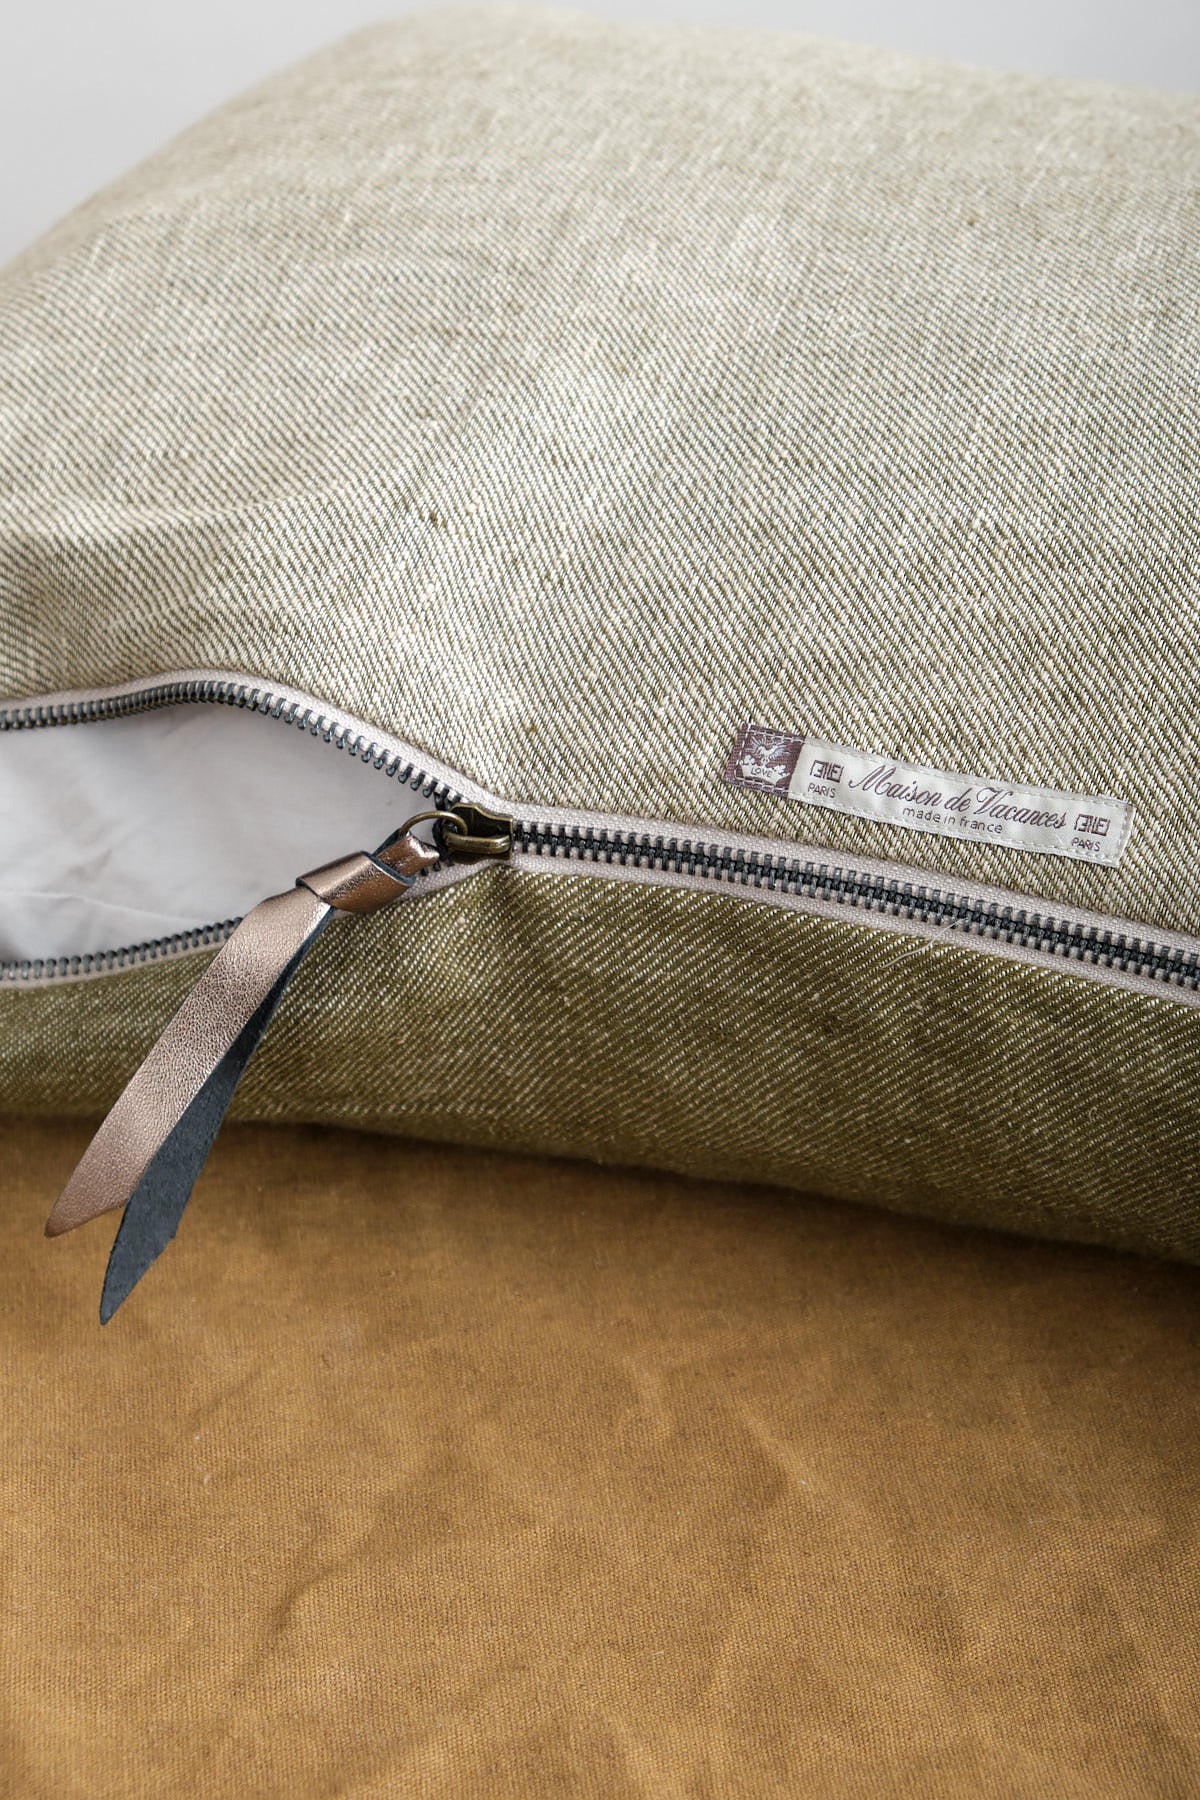 Linen Vice Versa Cushion in Kaki with zipper closure